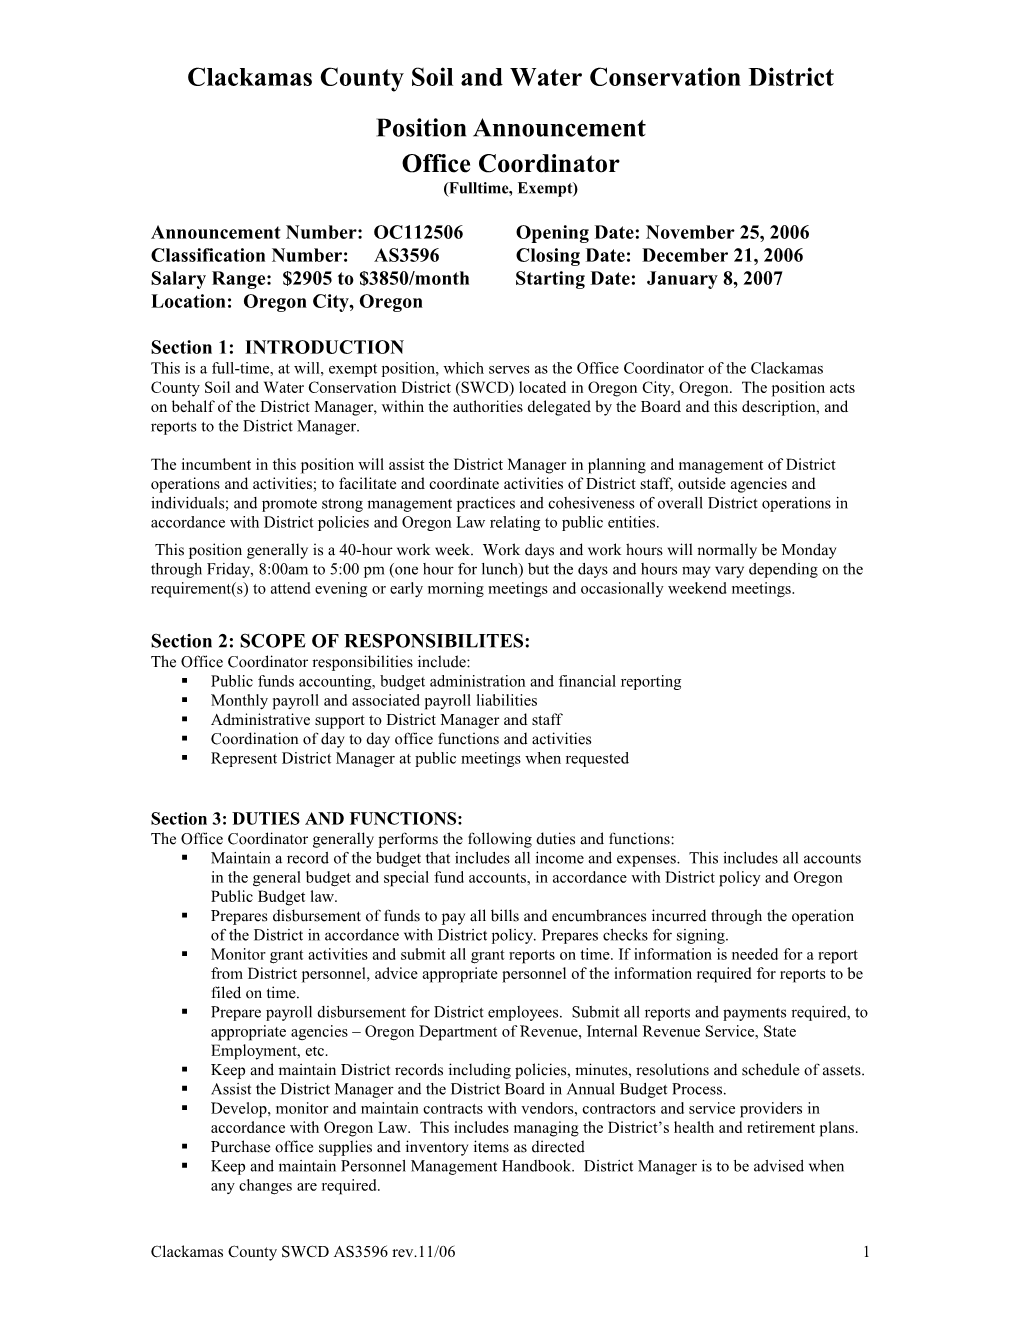 SWCD Office Coordinator Position Description